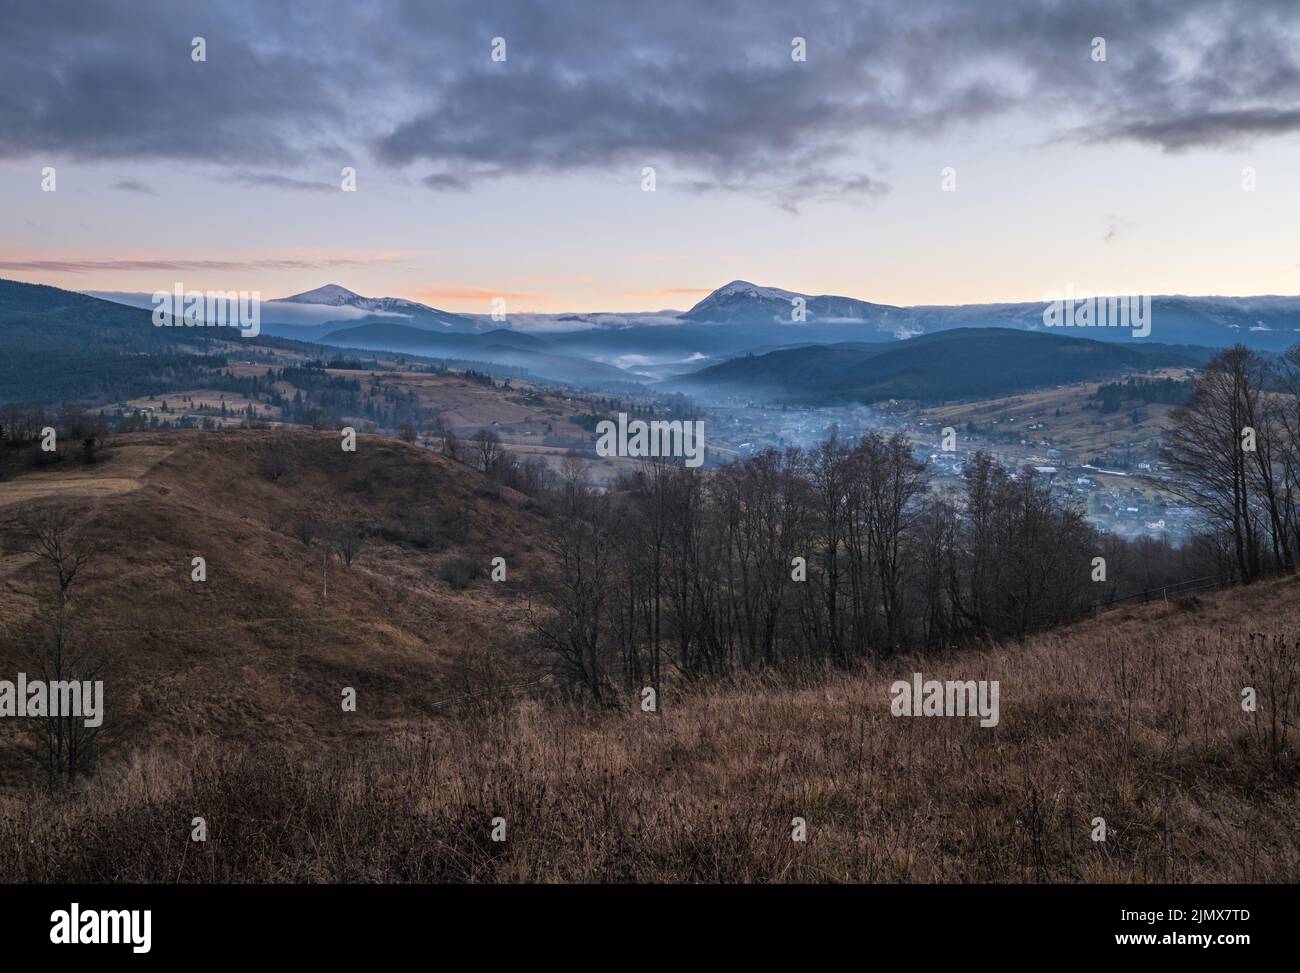 Picturesque pre sunrise morning above late autumn mountain countryside. Ukraine, Carpathian Mountains, Hoverla and Petros tops i Stock Photo